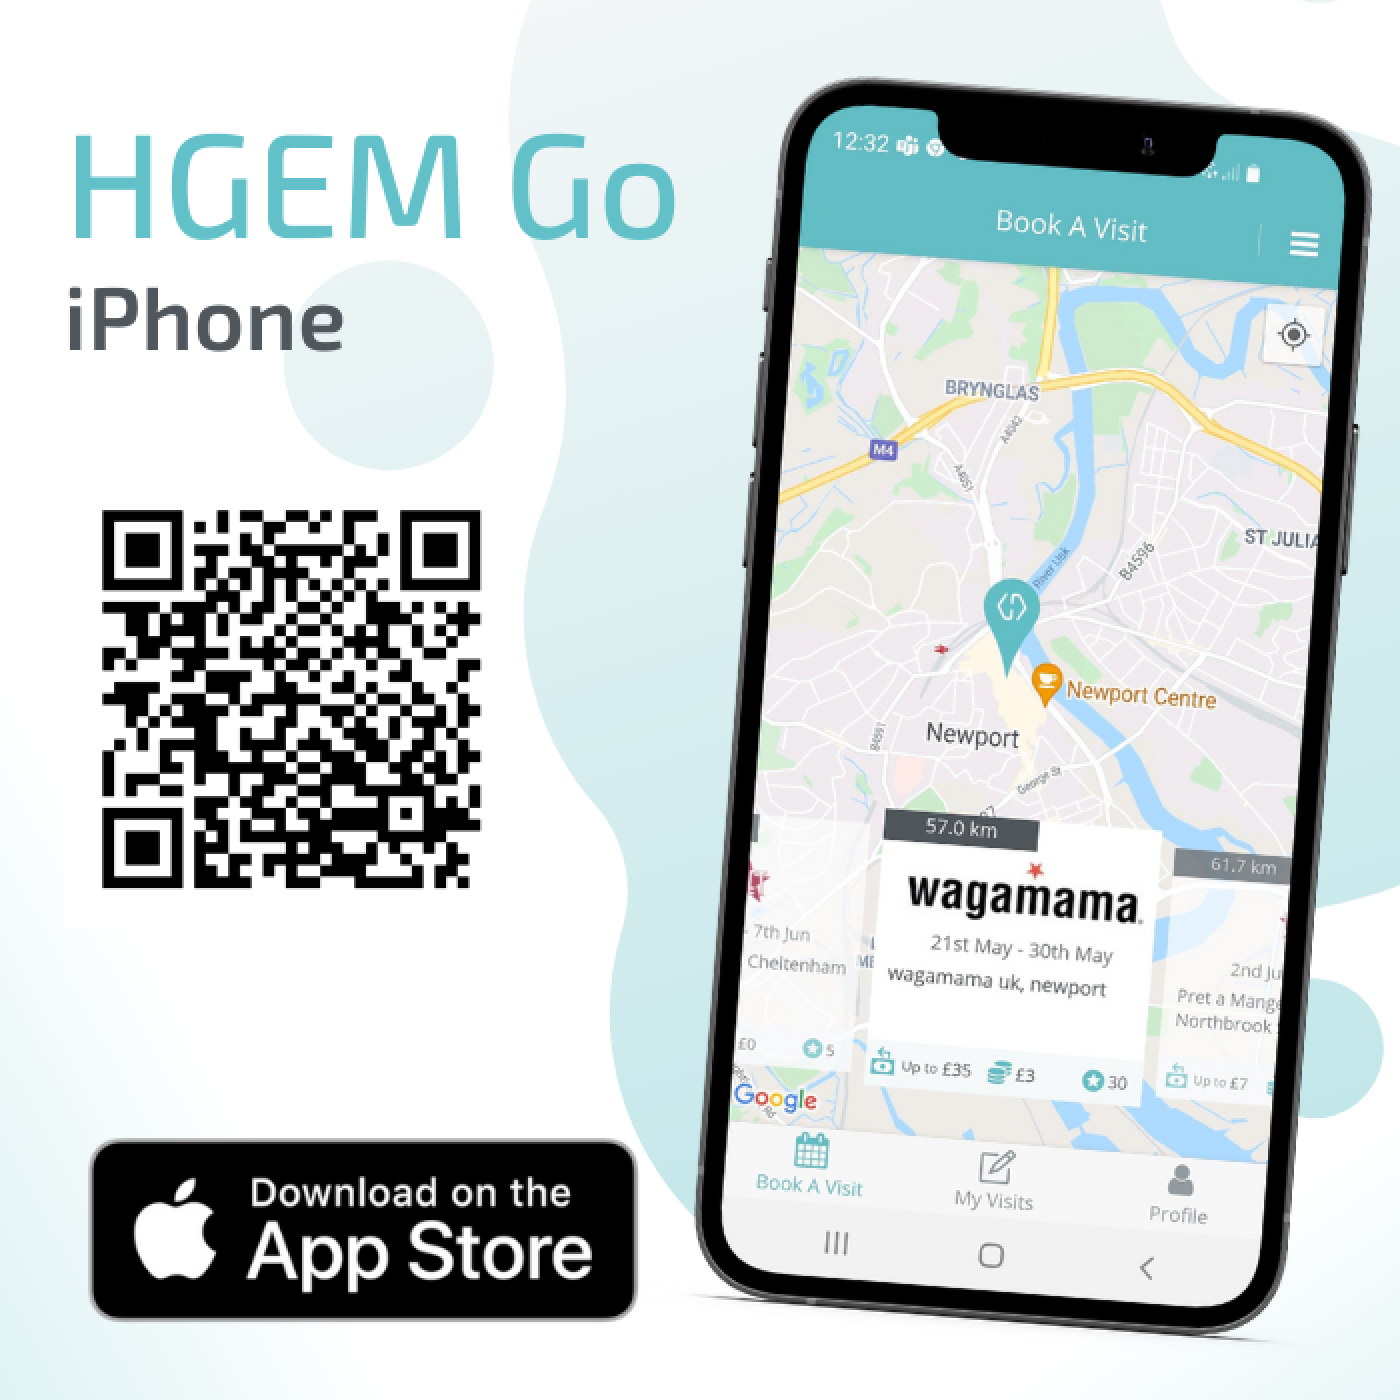 HGEM Go app